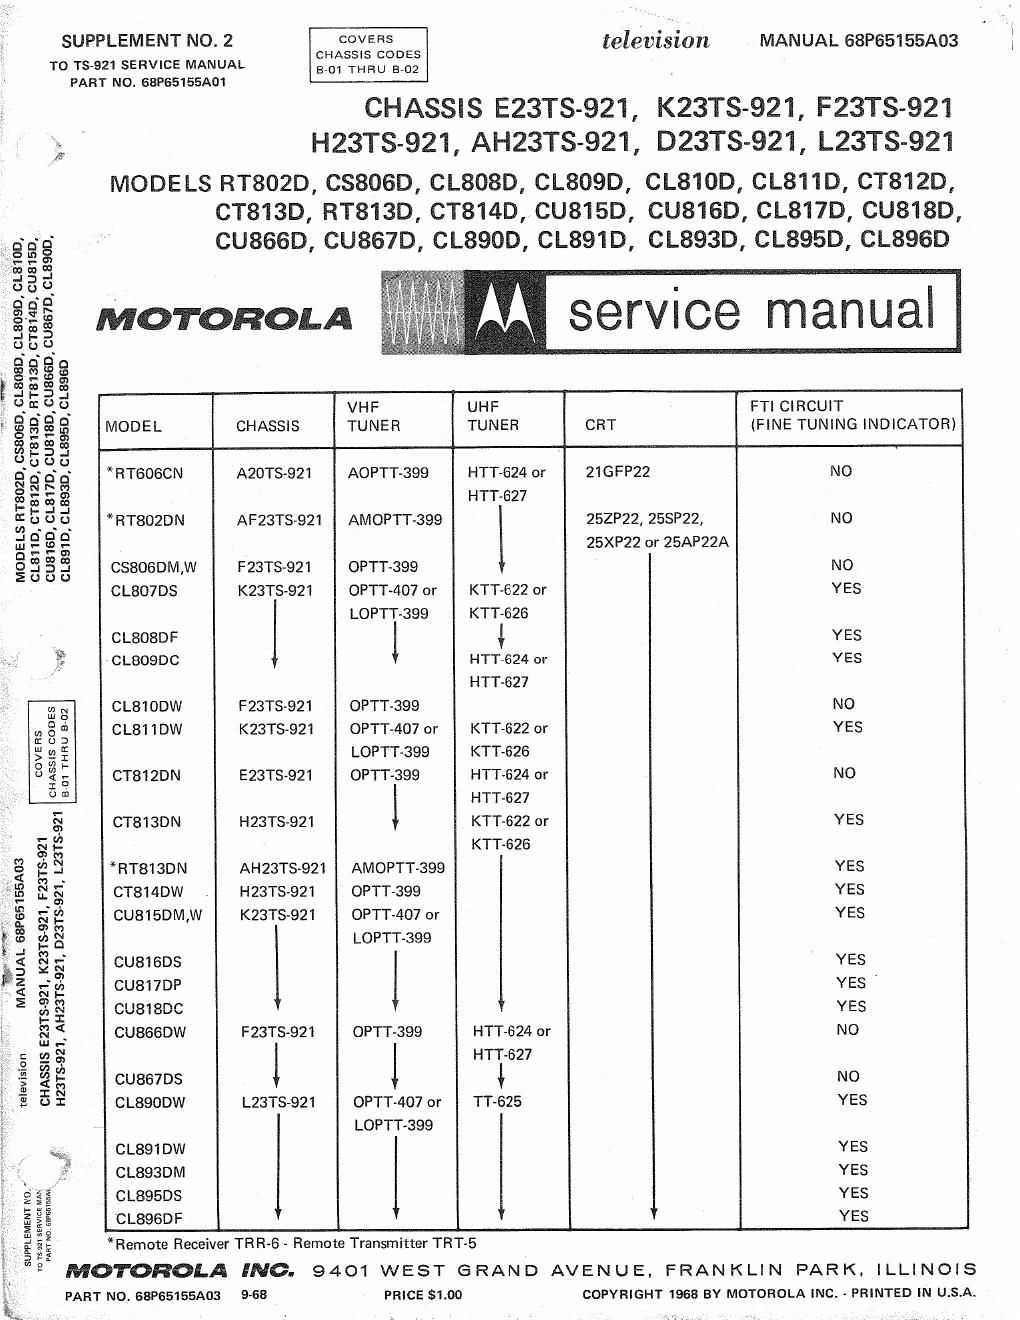 motorola cl 895 d service manual